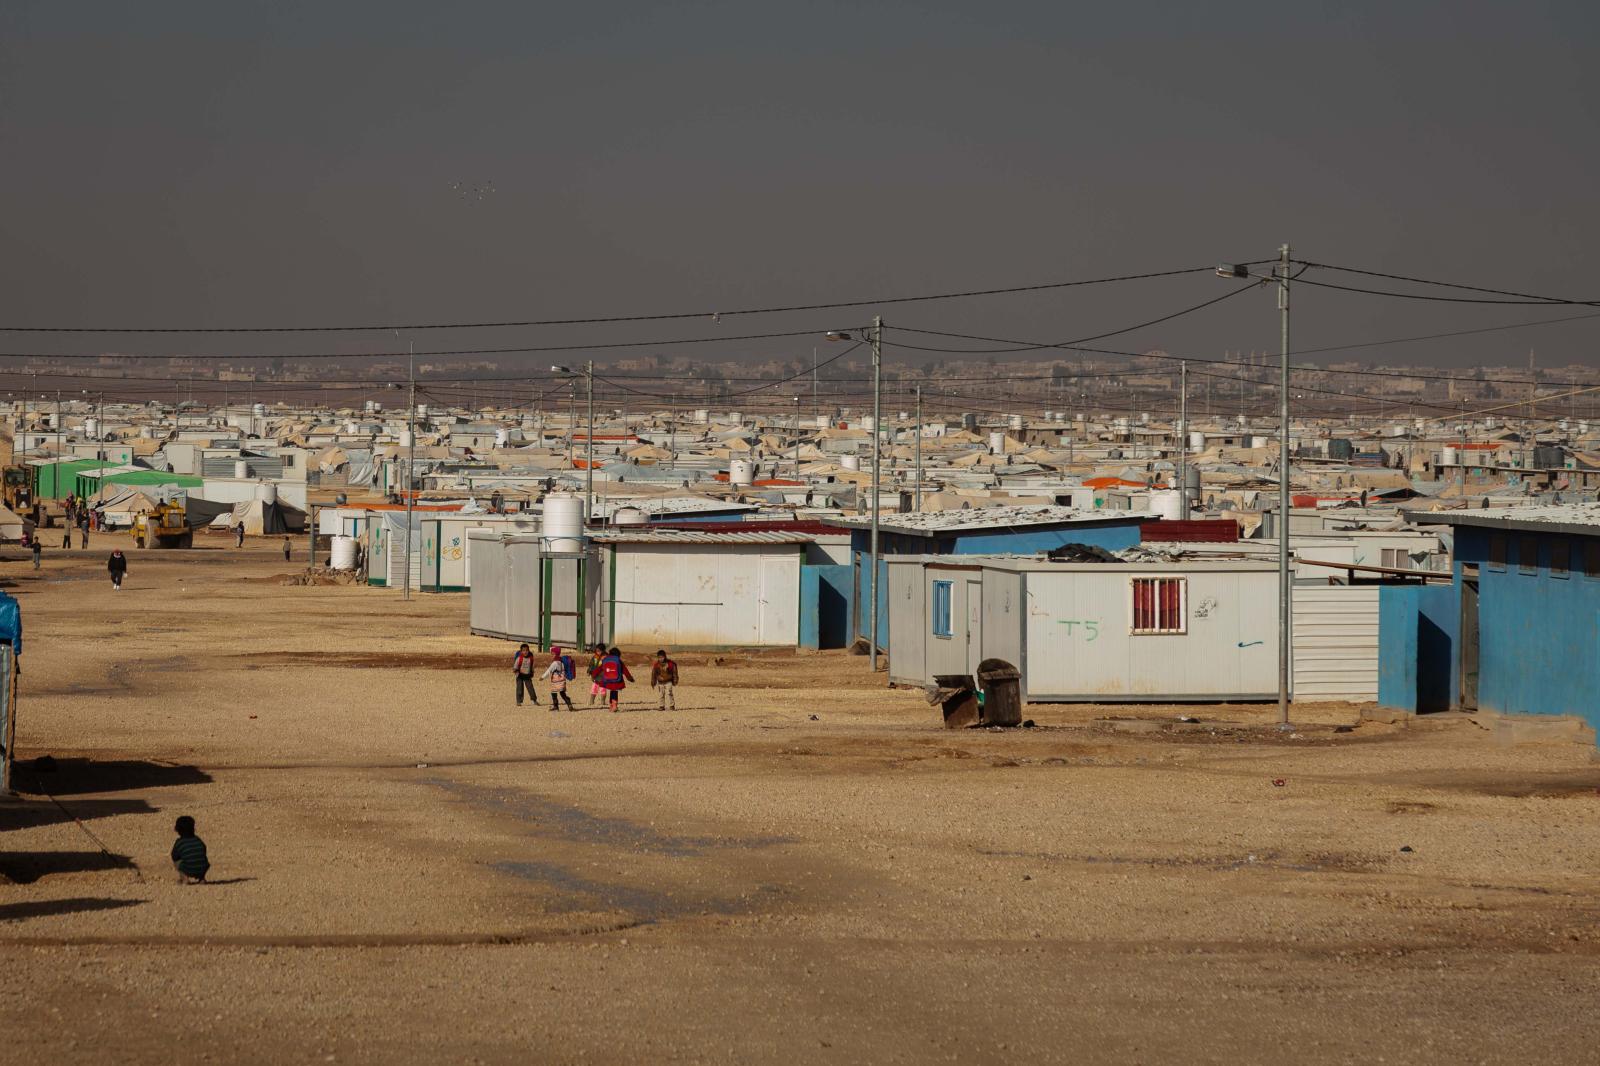 Zaatari. Jordan. November 2014....streets with mud in the winter.